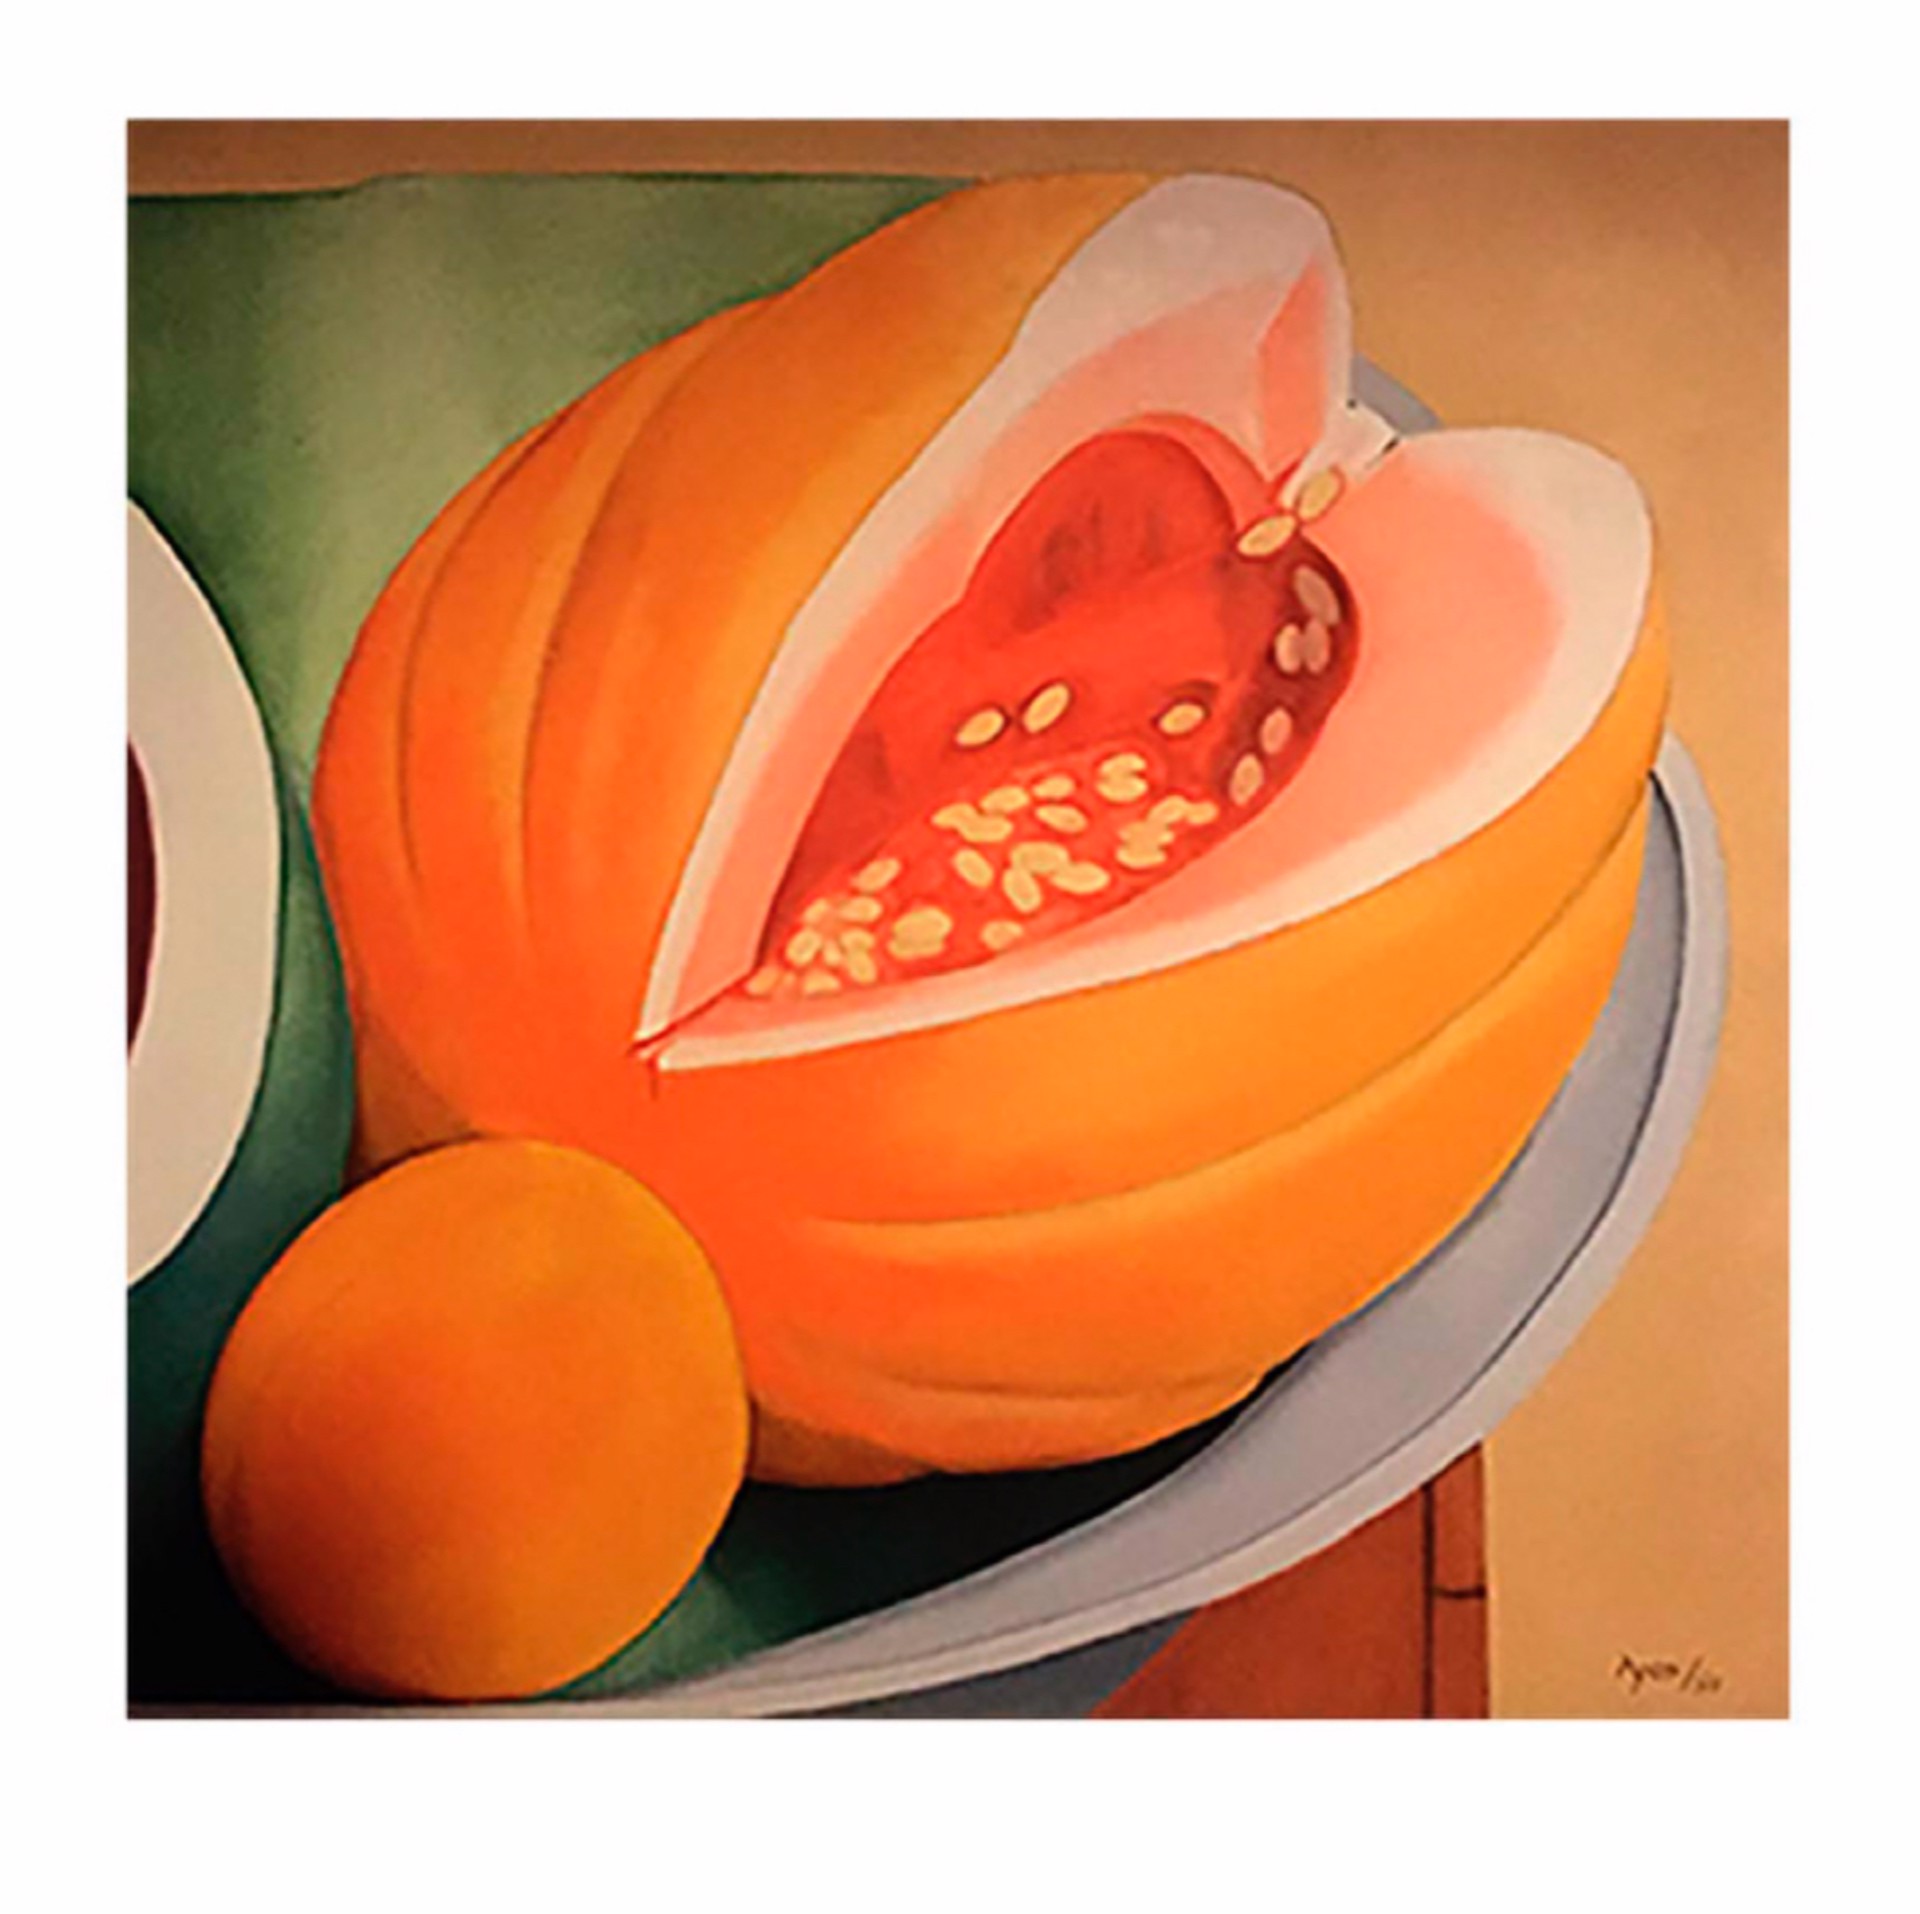 Melon by Ana Mercedes Hoyos